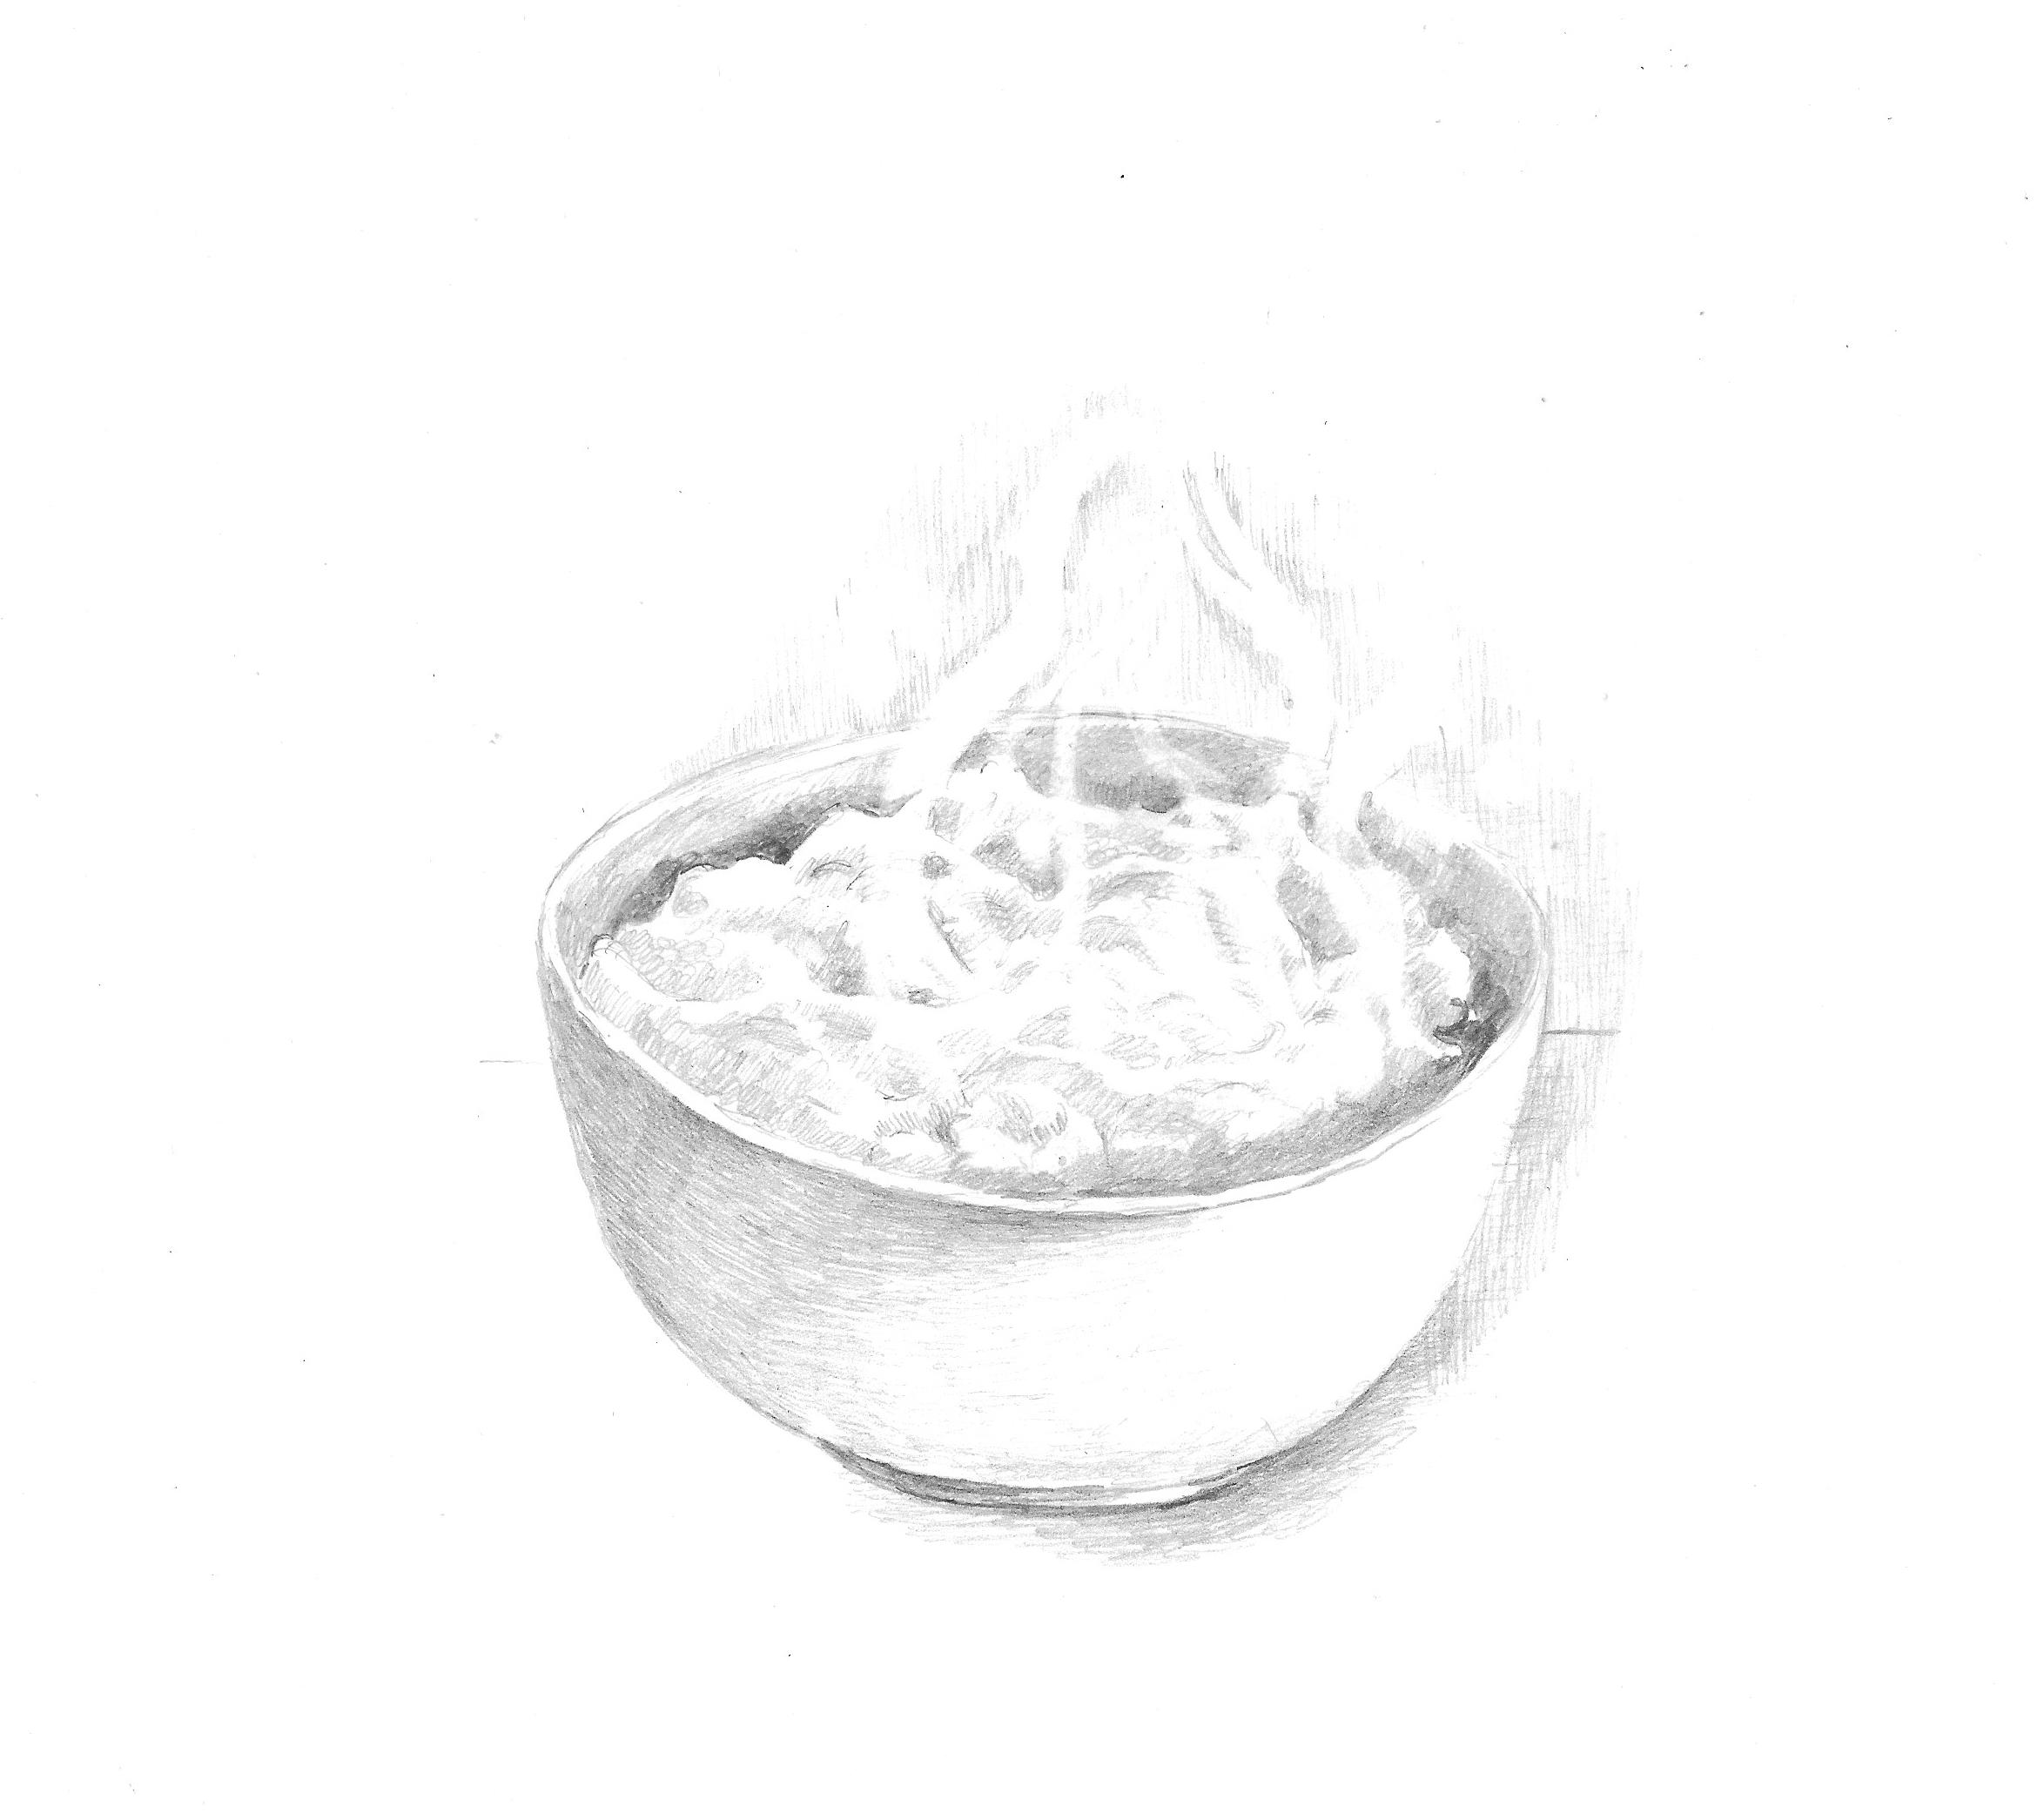 Bowl of porridge-oatmeal